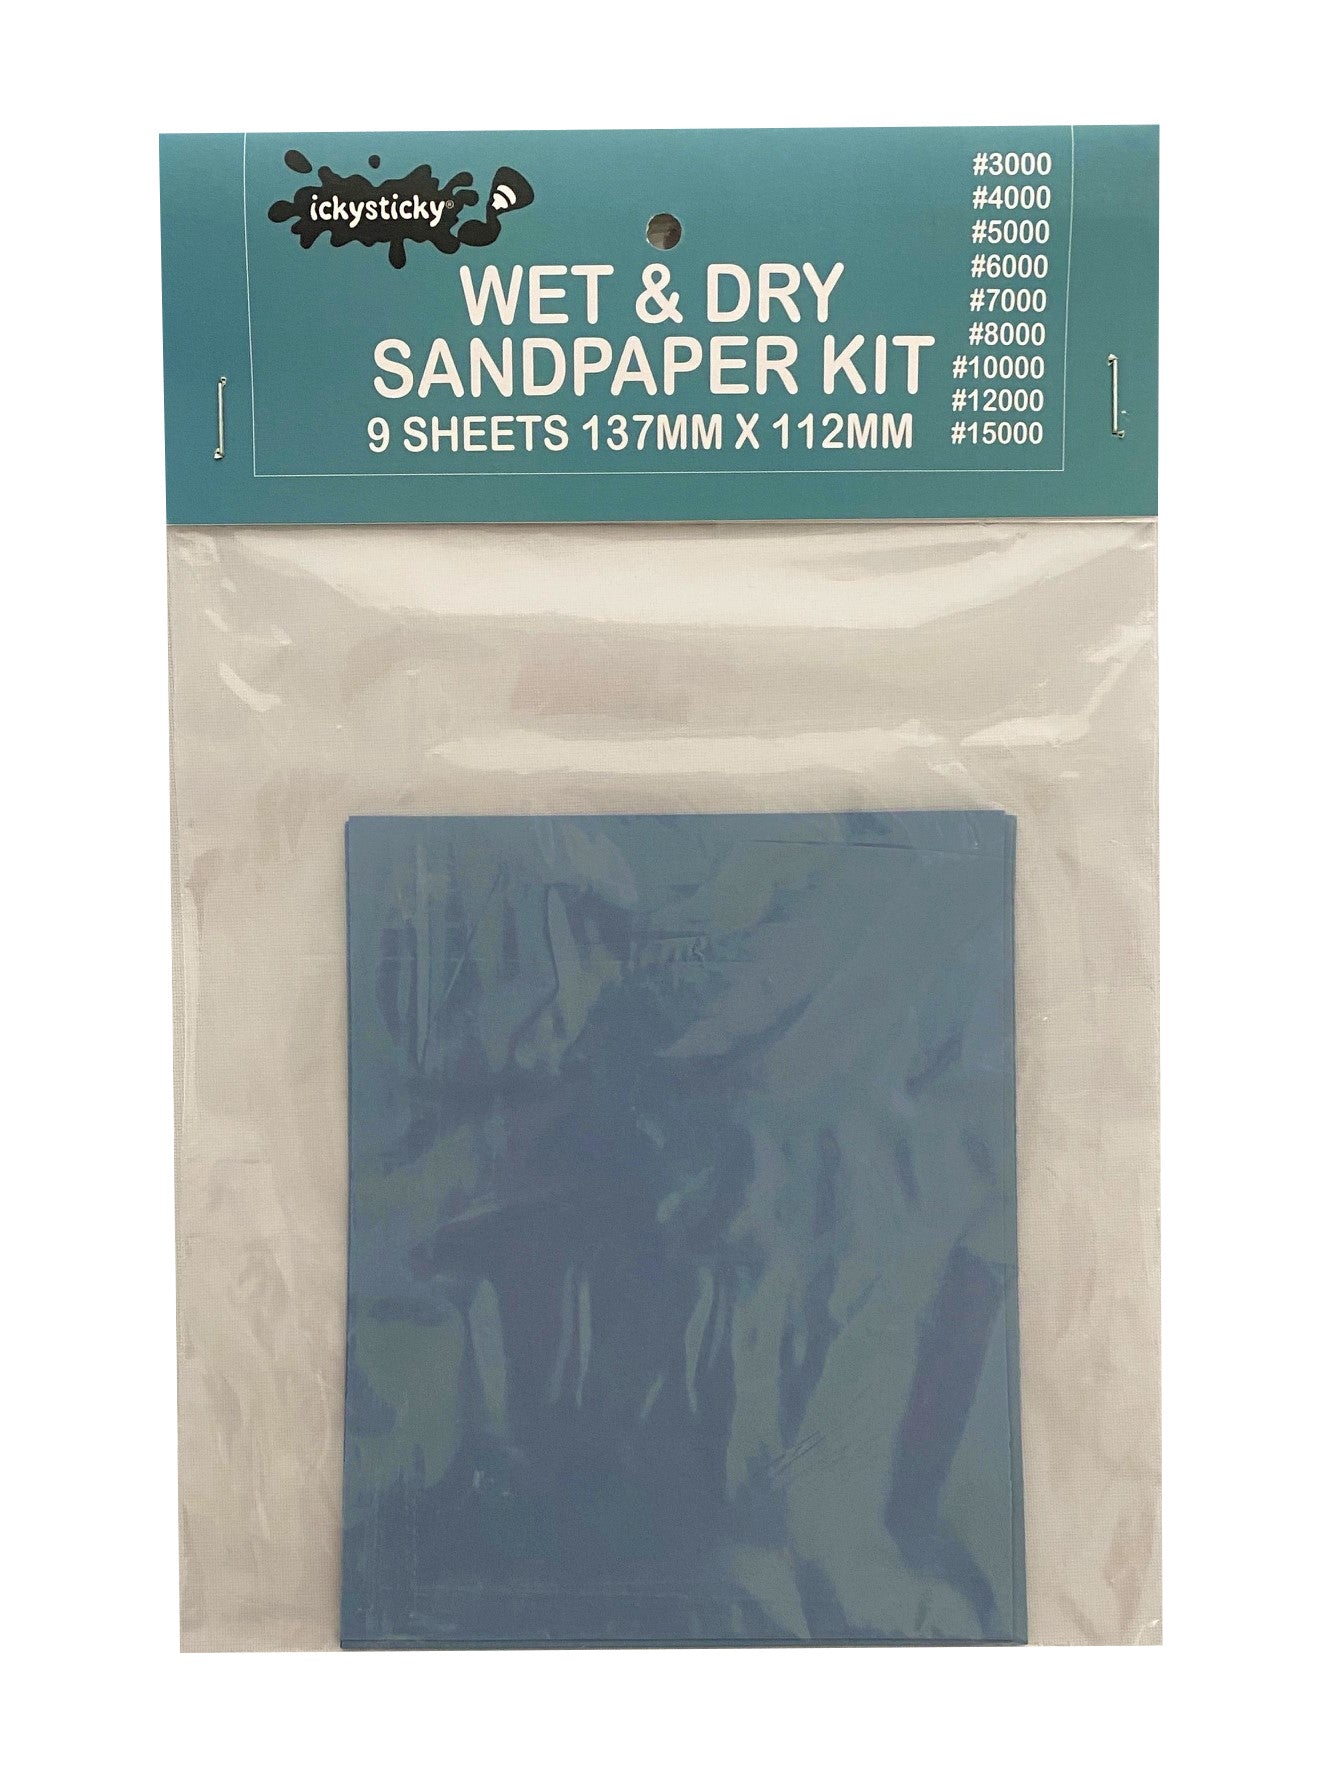 Ickysticky Wet & Dry Sandpaper Kit 9 Sheets